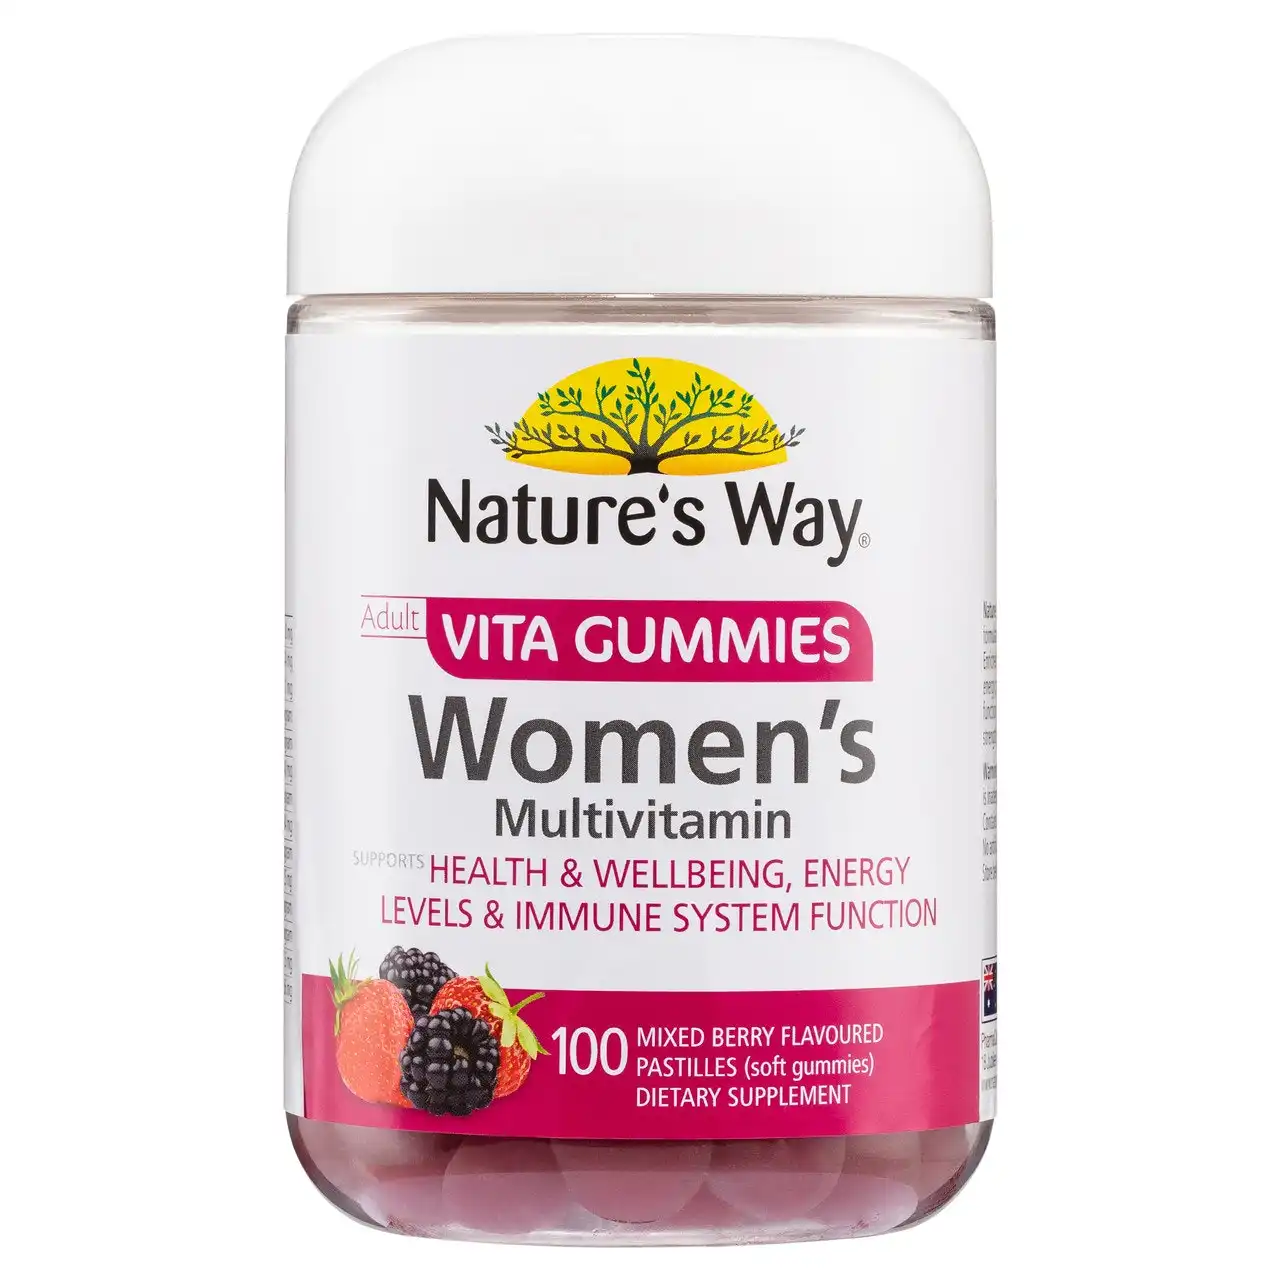 Nature's Way Adult Vita Gummies Women's Multivitamin 100's